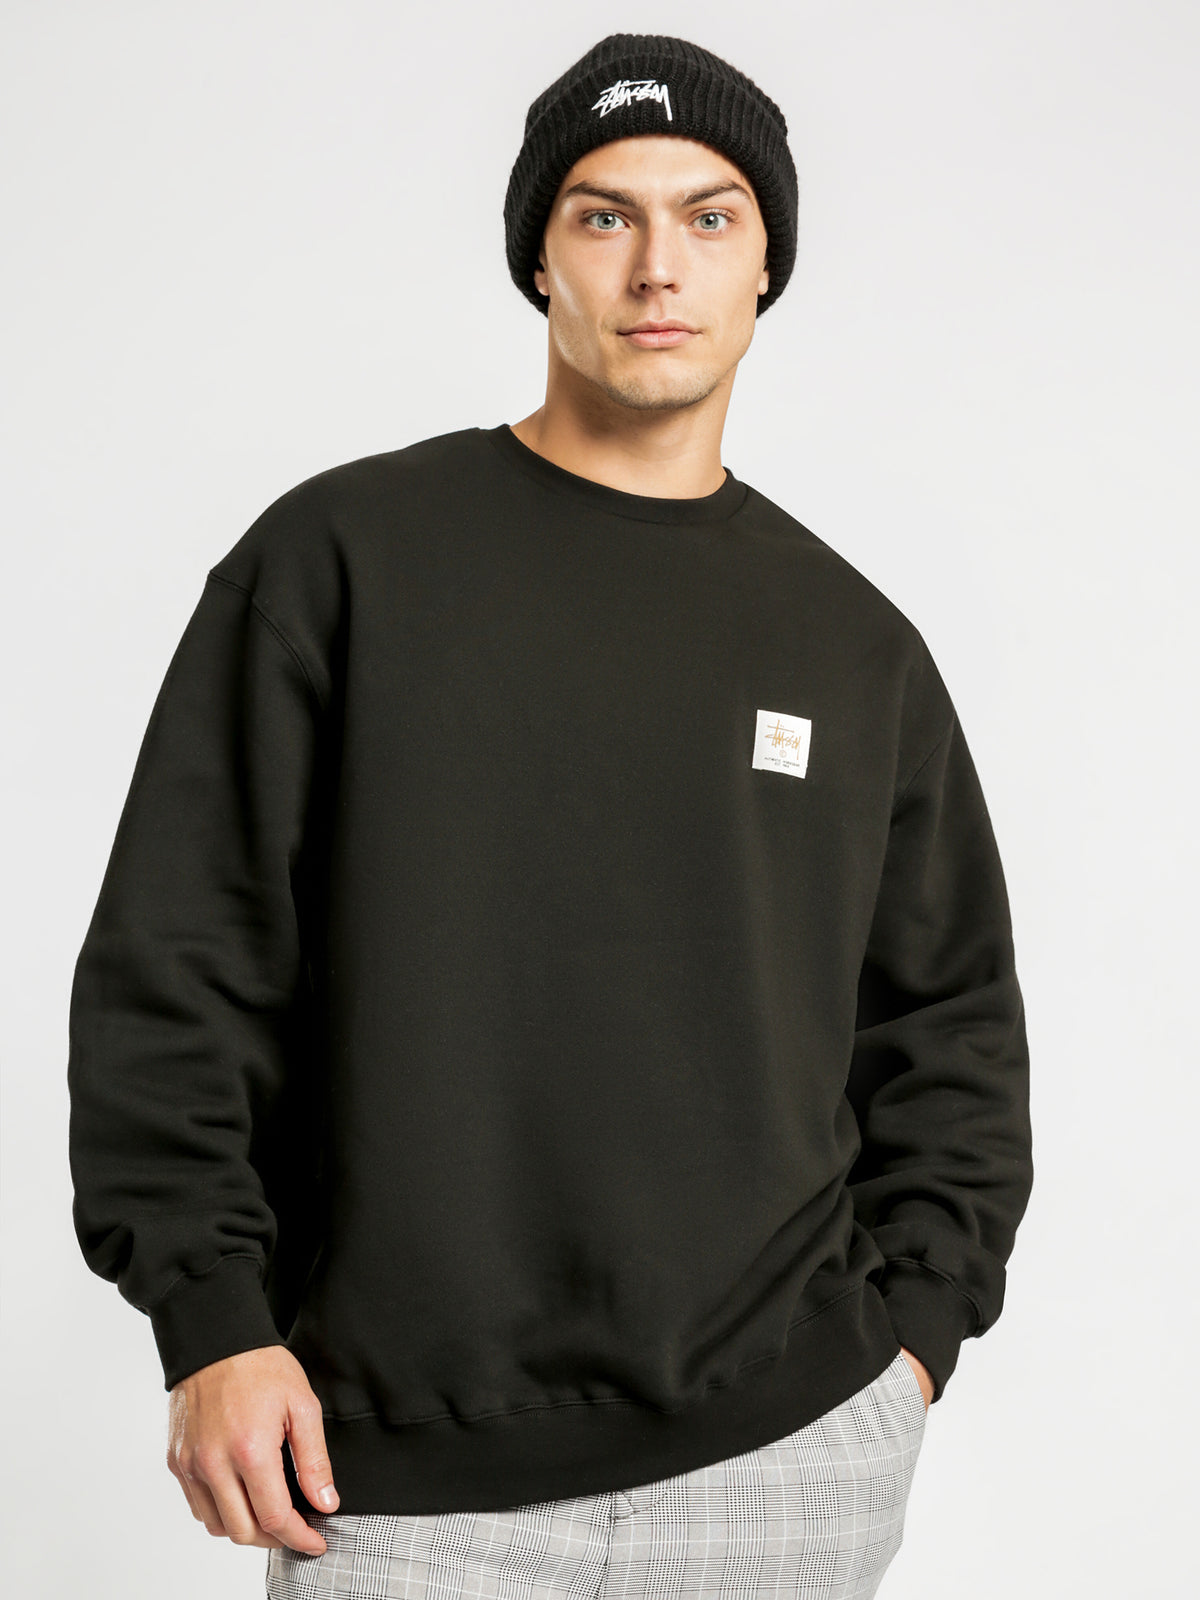 Authentic Workwear Crew Sweater in Black